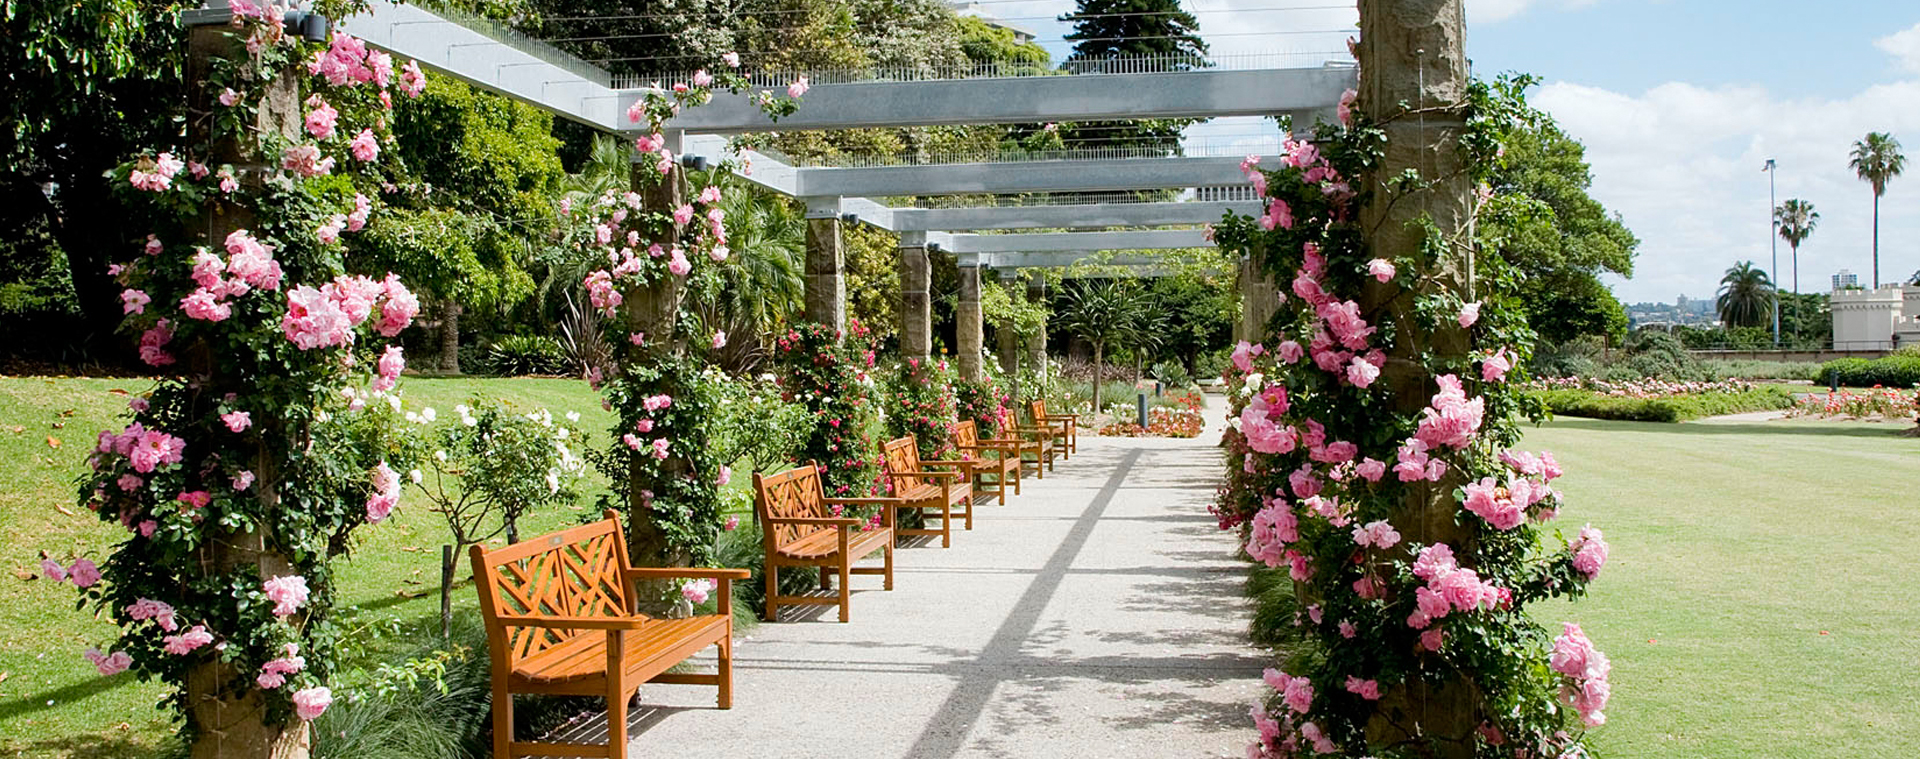 royal botanic gardens, rose garden and pavilion